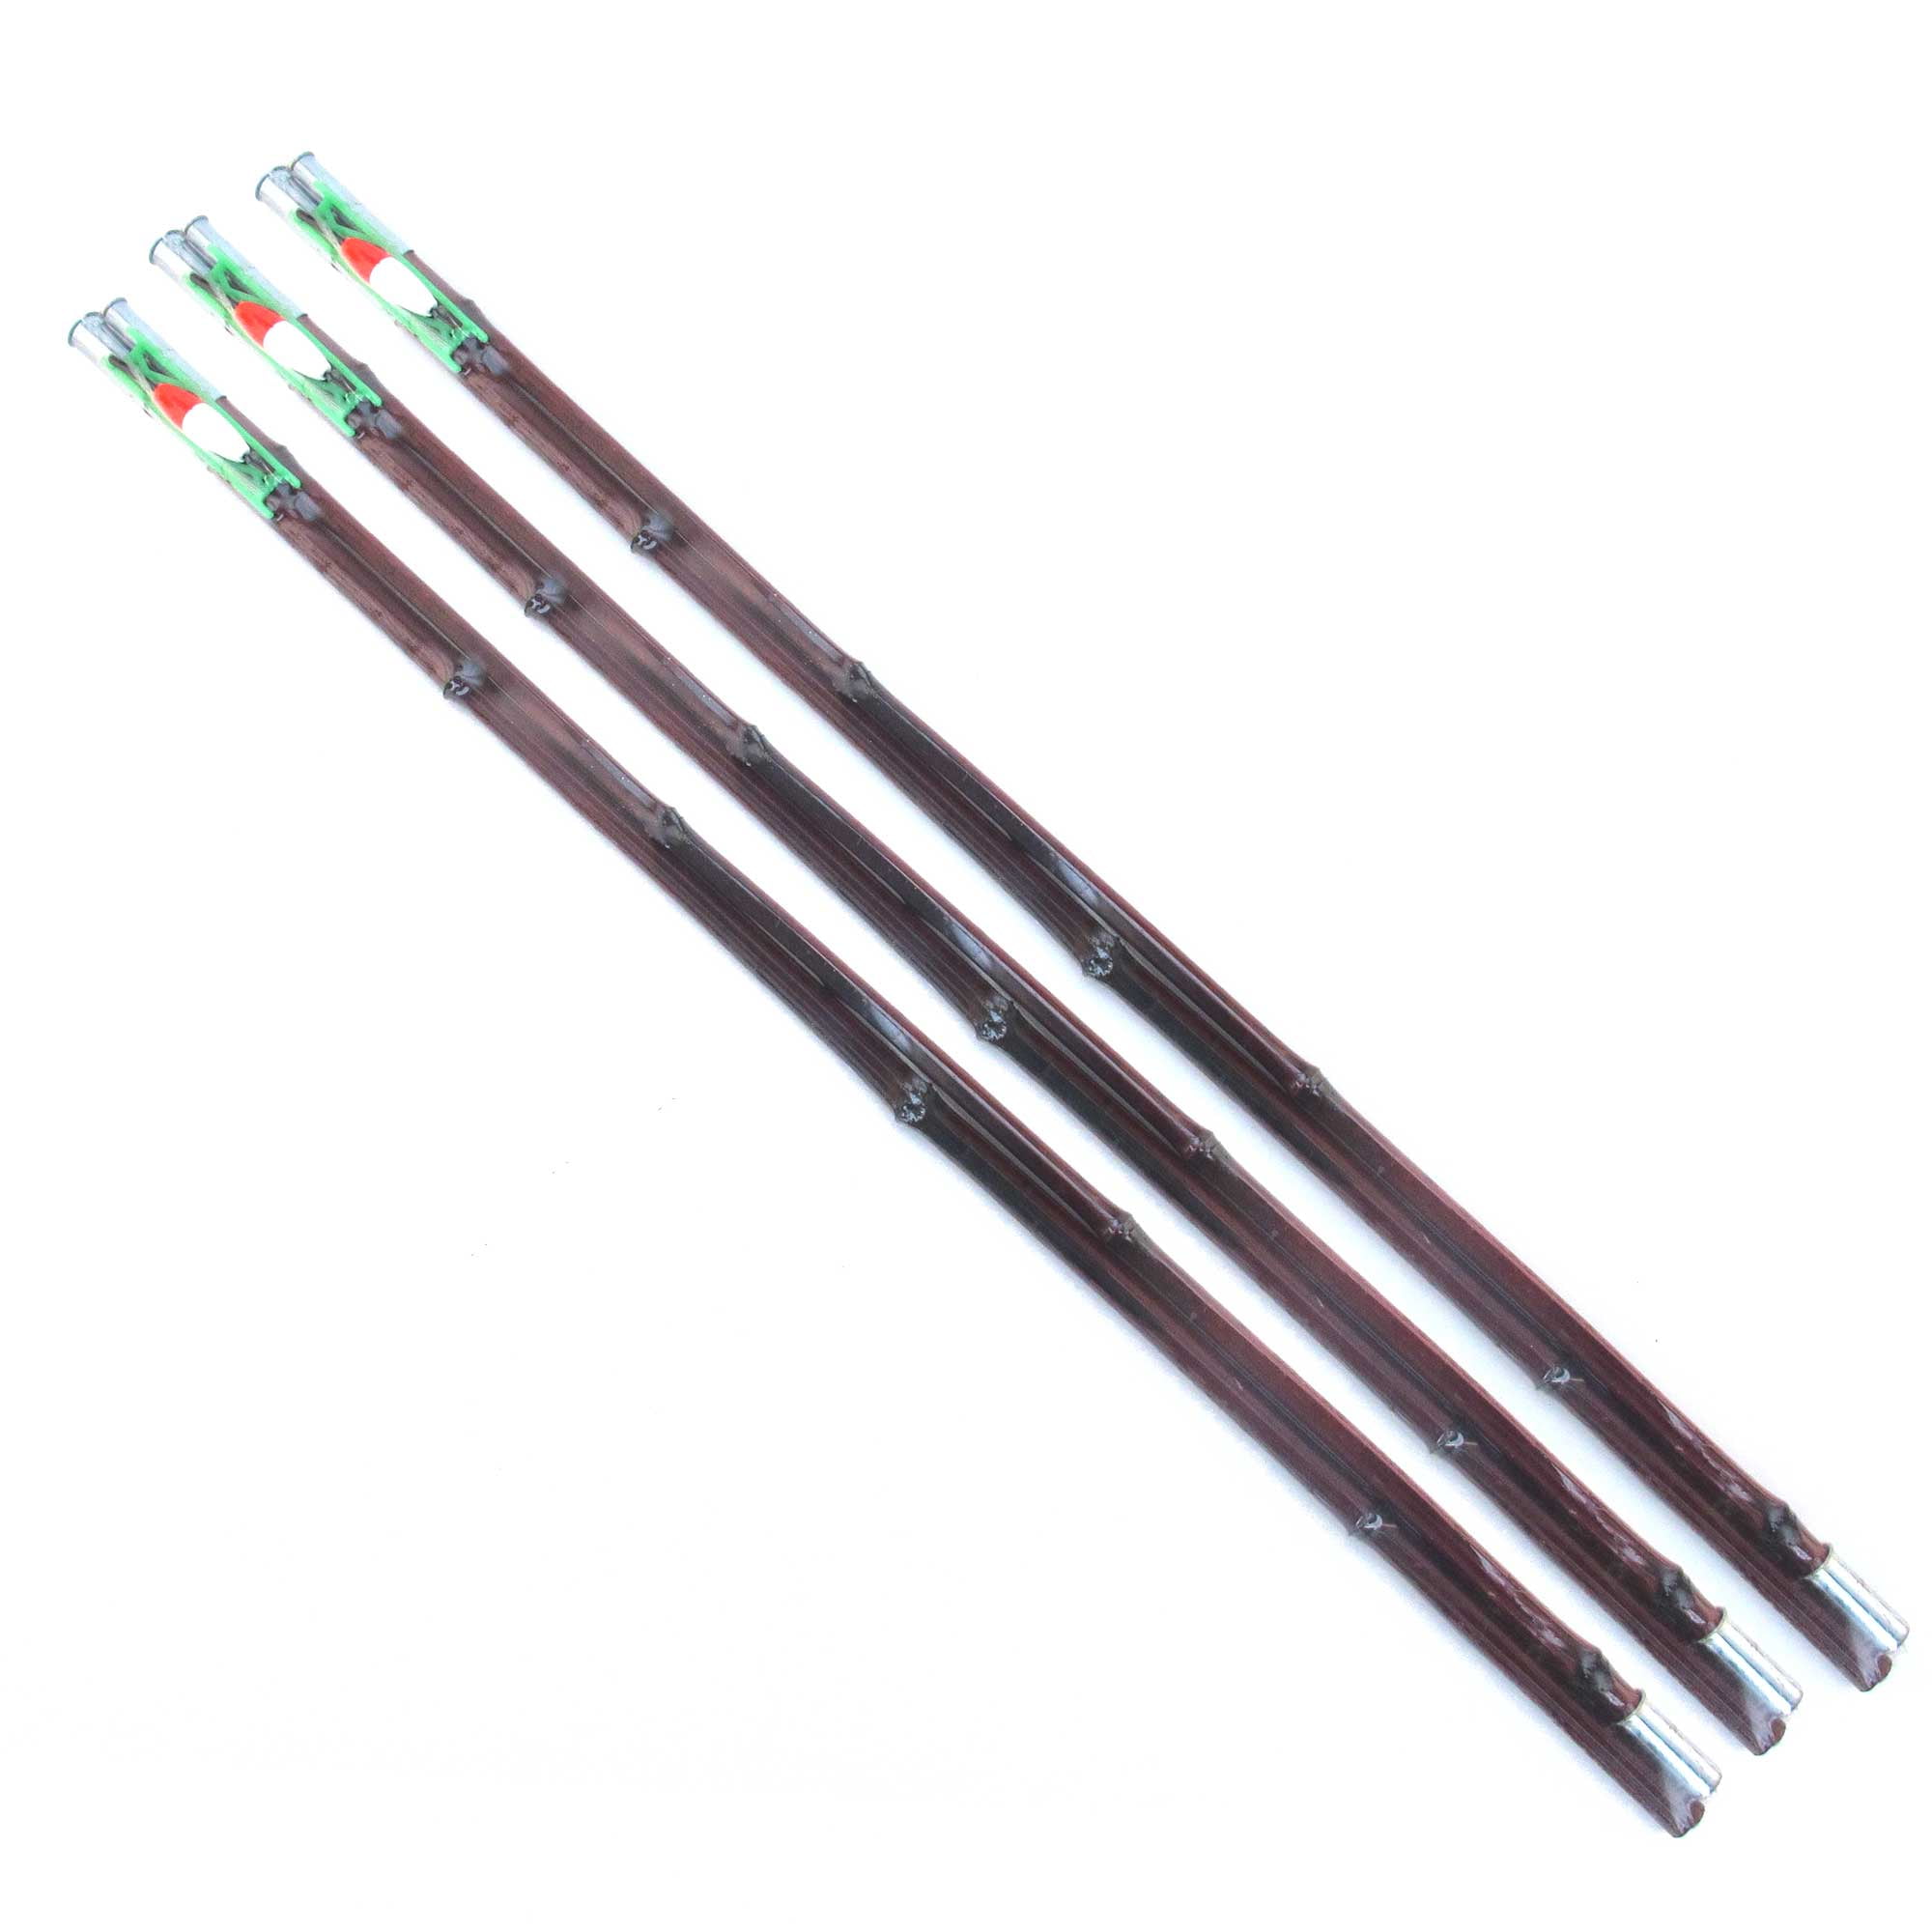 Bamboo Cane Fishing Pole w/ Bobber, Hook, Line, Sinker - Vintage Fishing Pole - BambooMN - 1 Set, Size: 78, Brown